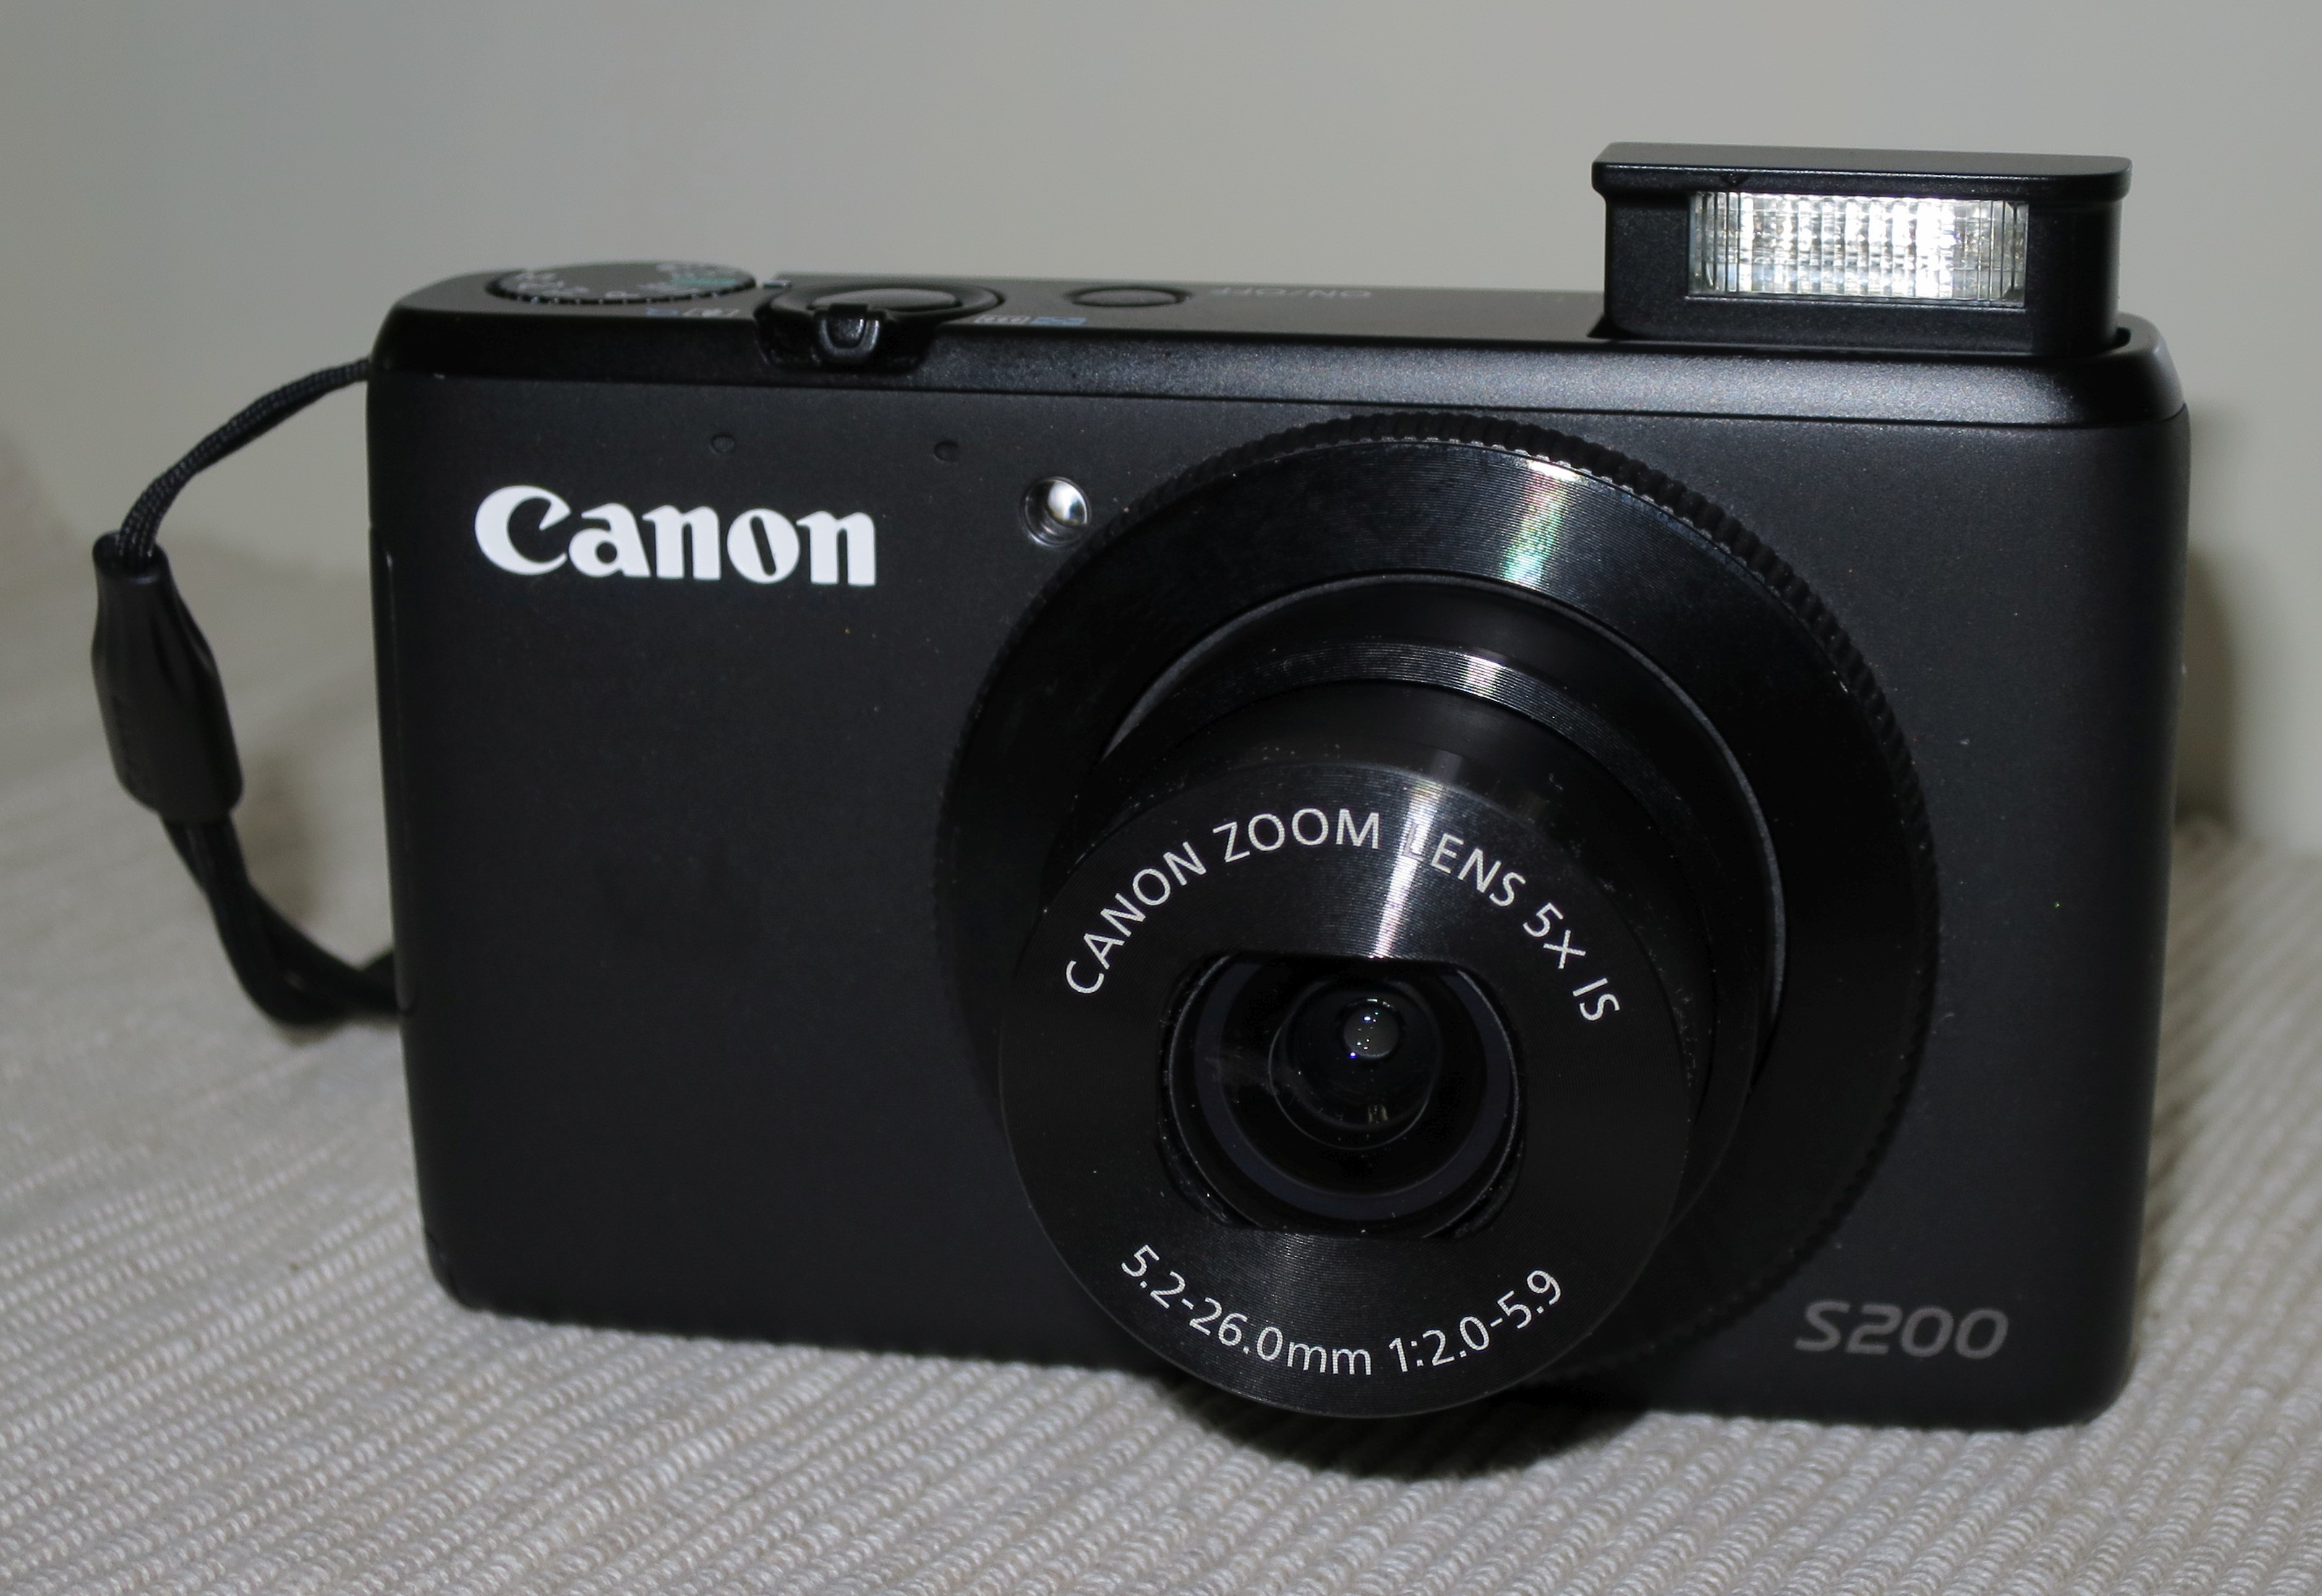 Canon PowerShot S200 - Wikipedia